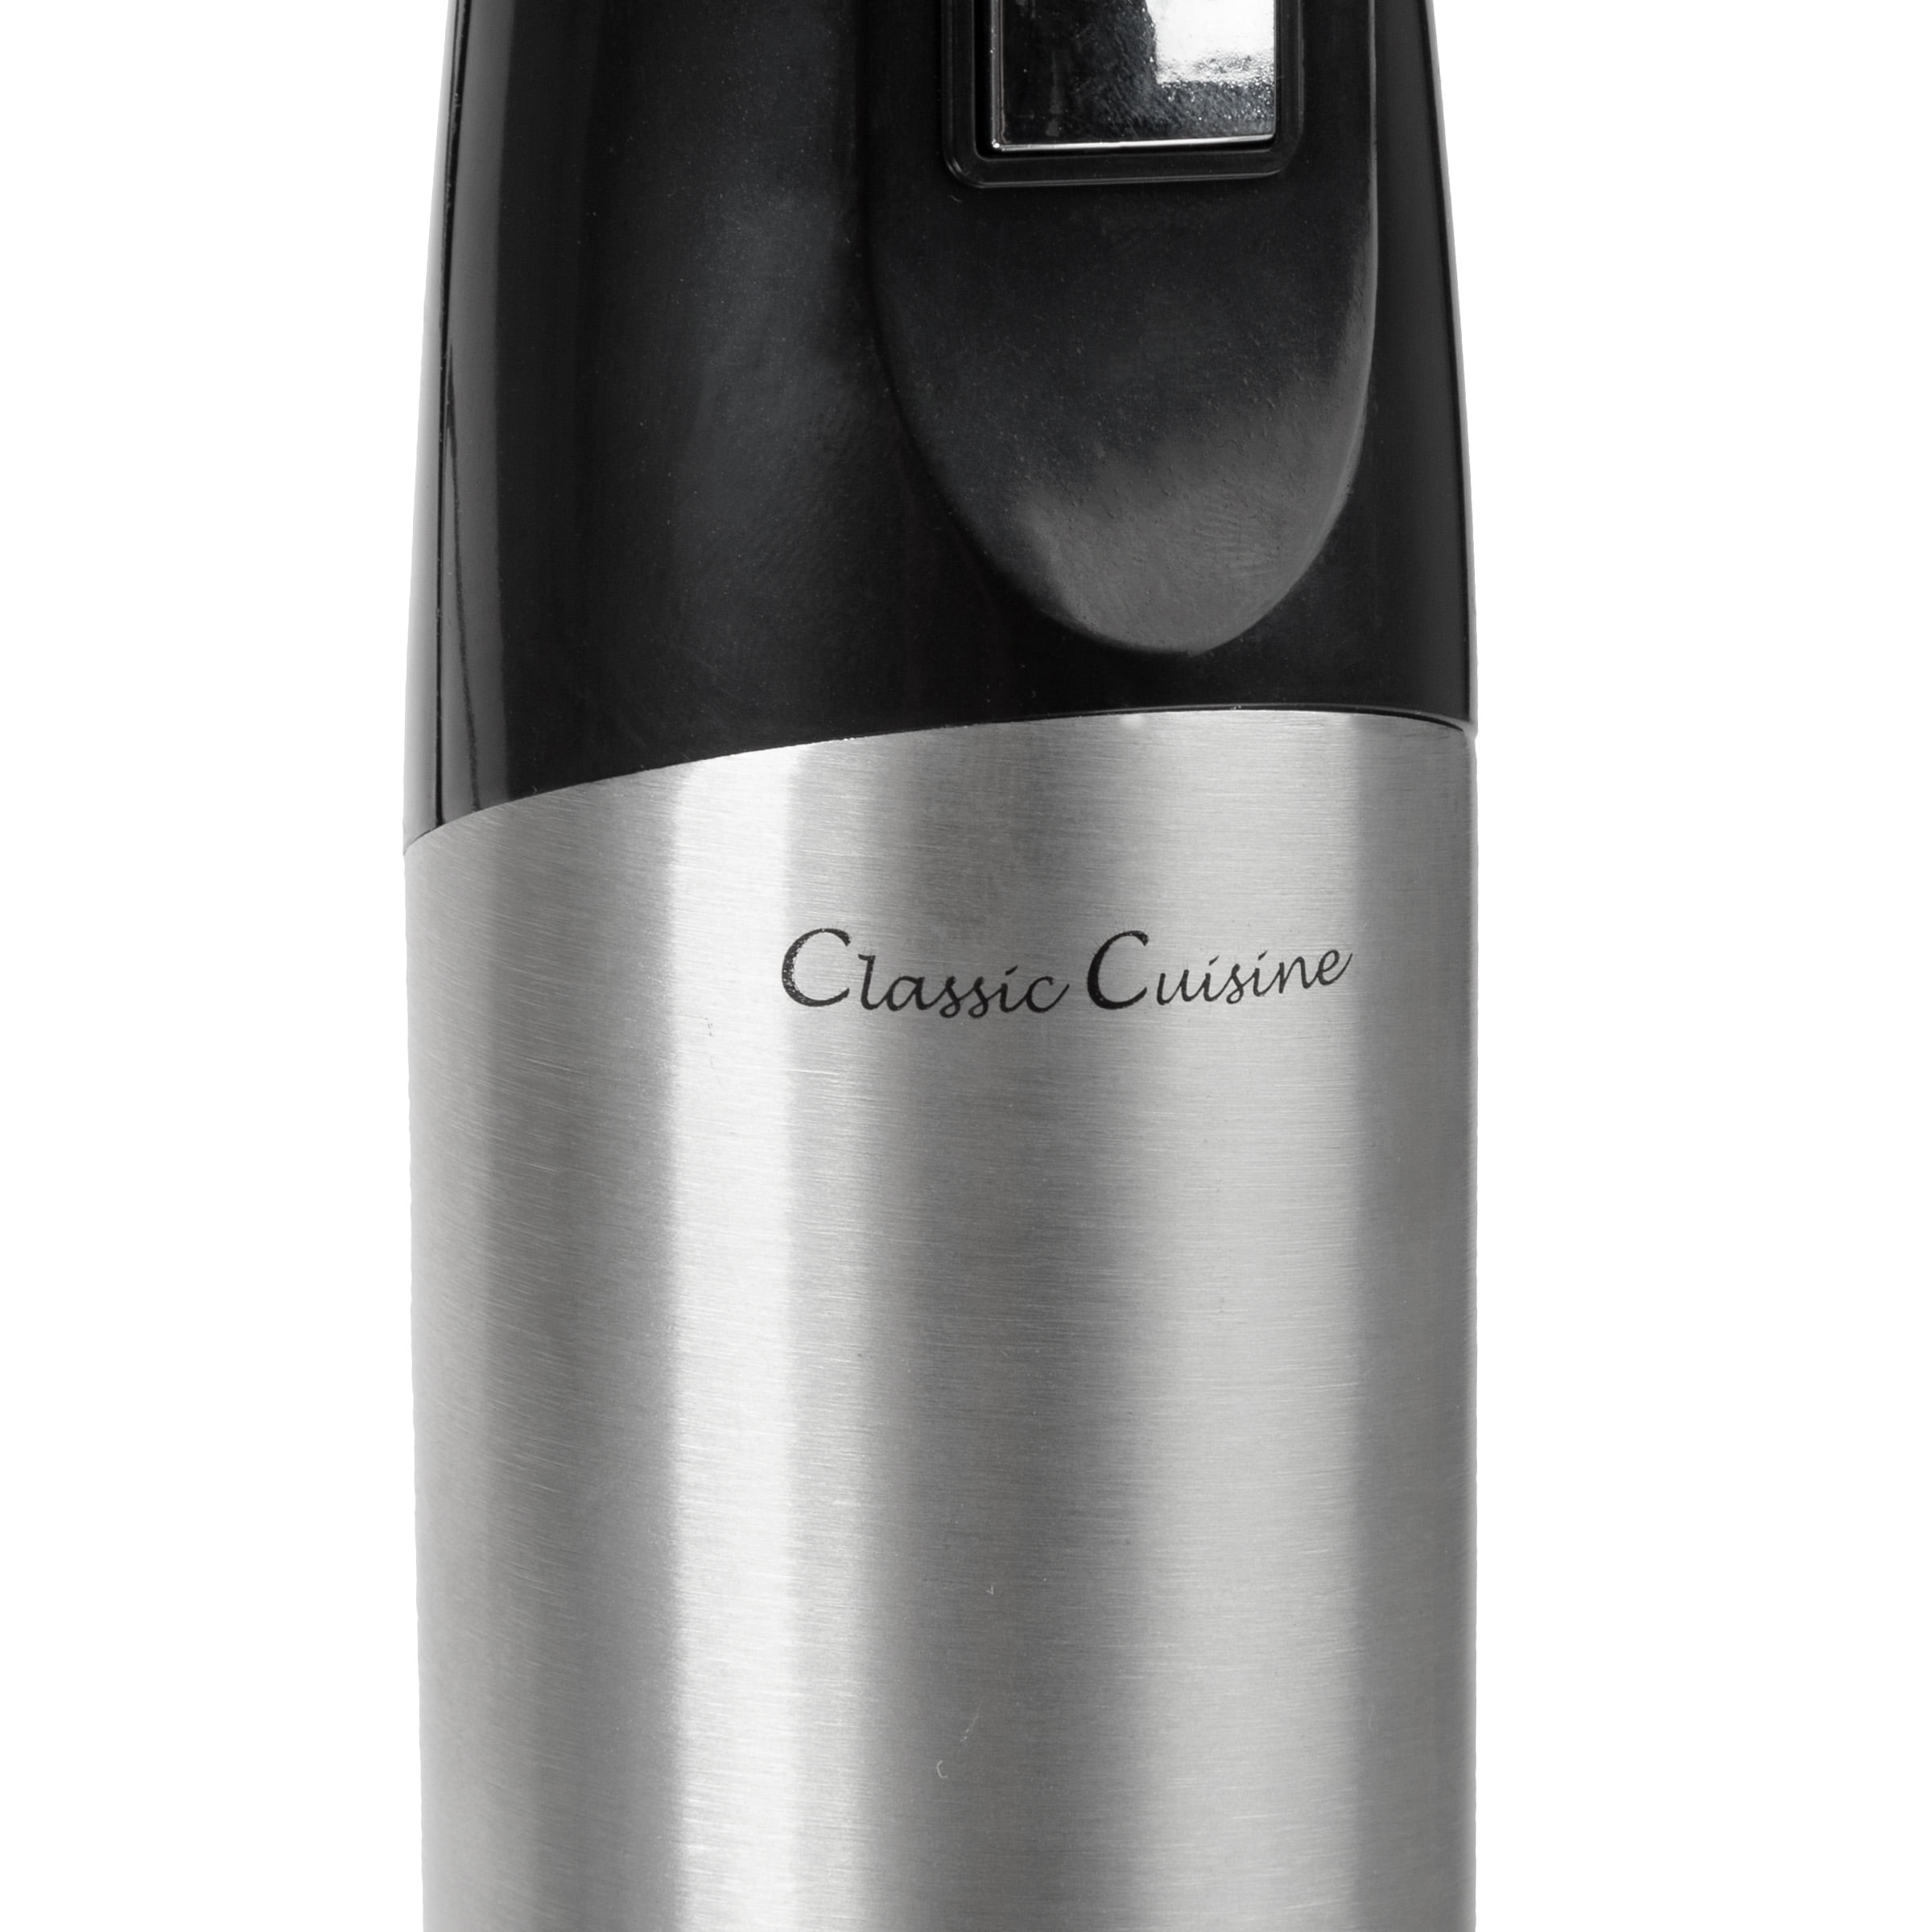 Classic Cuisine Immersion Blender-4-In-1 6 Speed Hand Mixer Set Whisk, Food  Processor Cup, 32oz. Beaker, For Soup, Milkshakes, Salsa, Black